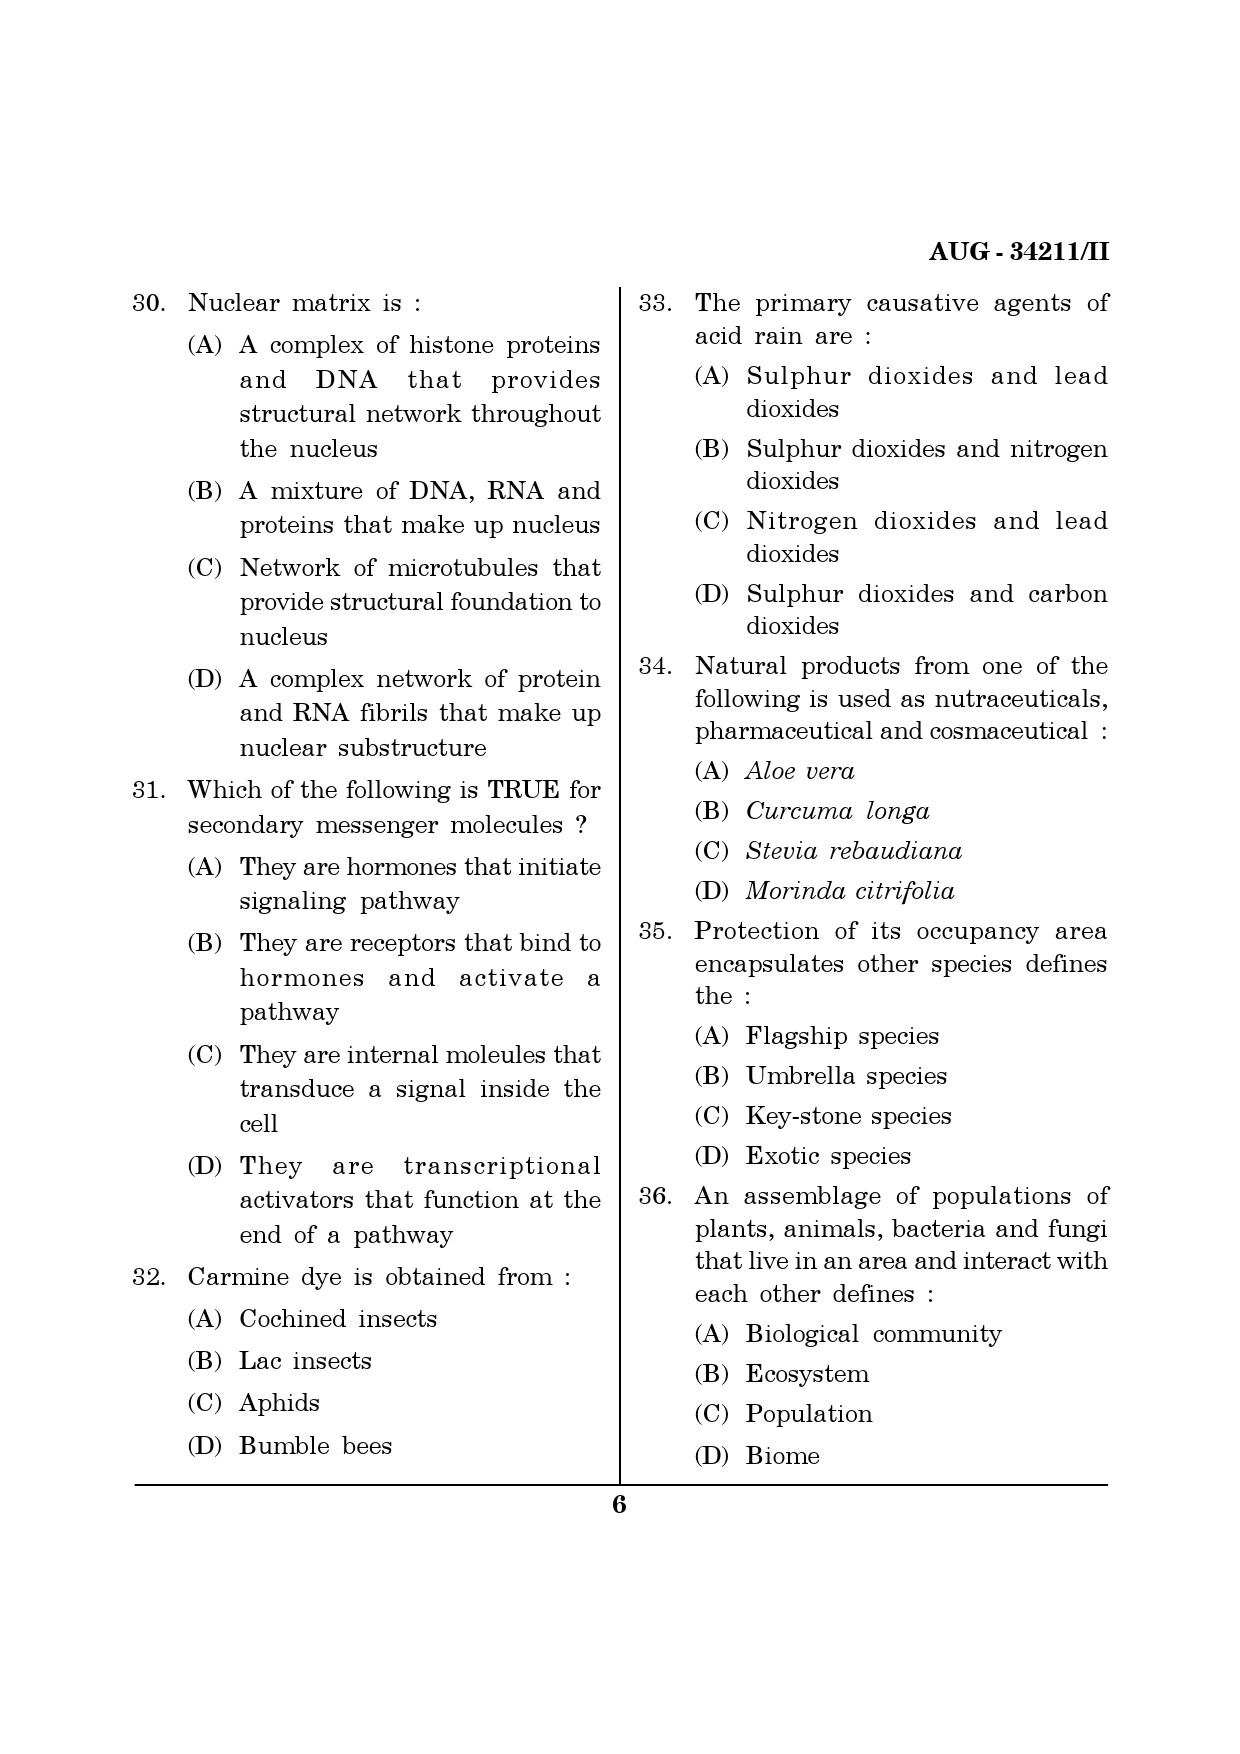 Maharashtra SET Life Sciences Question Paper II August 2011 6